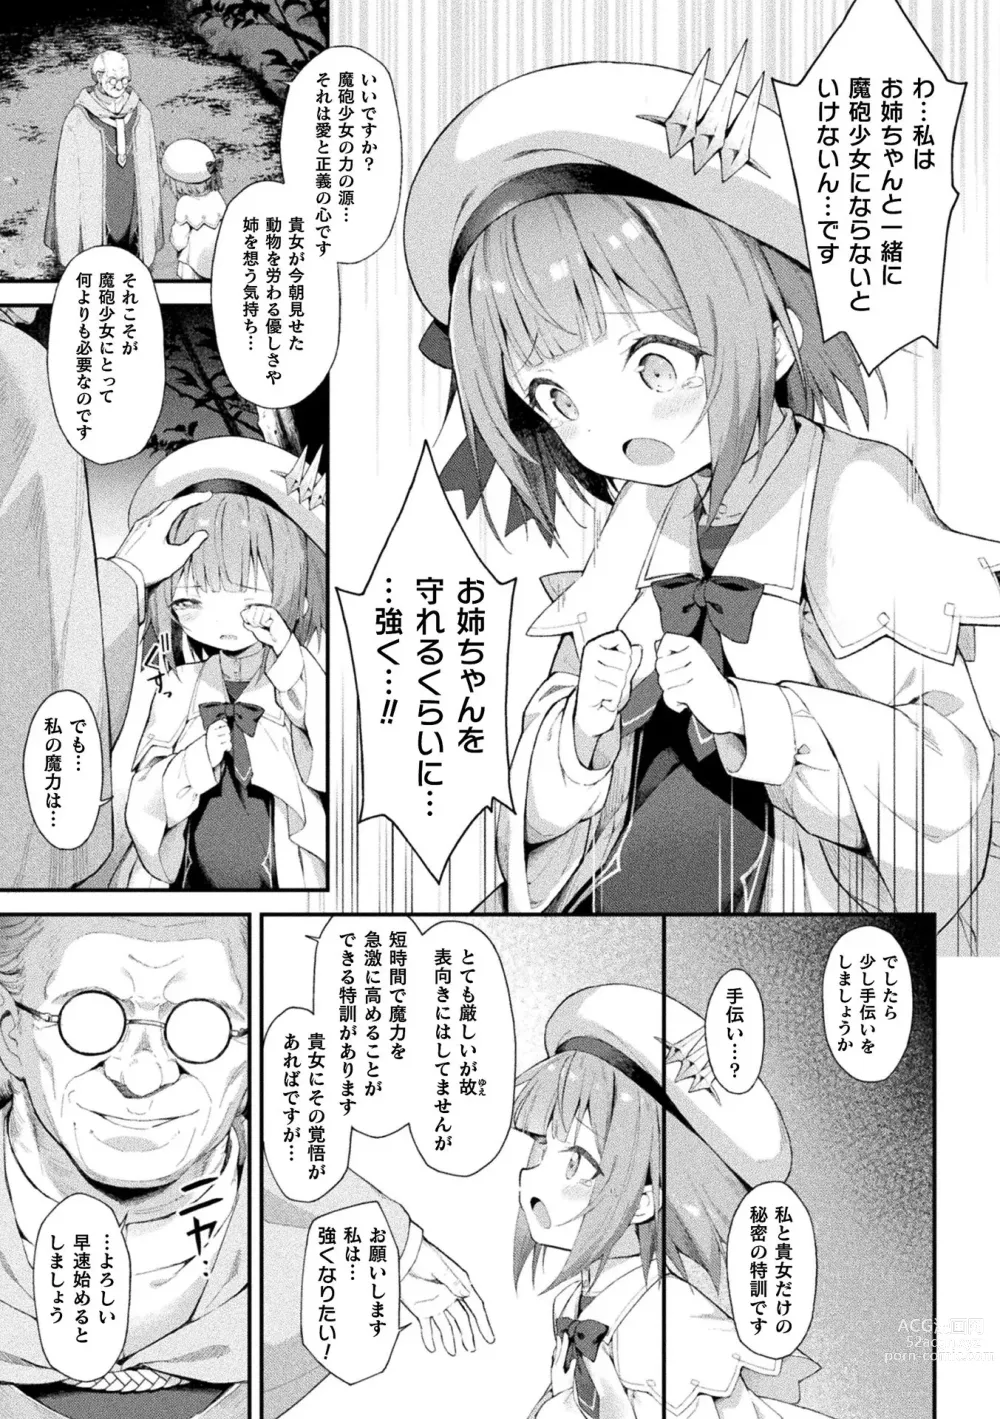 Page 7 of manga Kukkoro Heroines Vol. 32